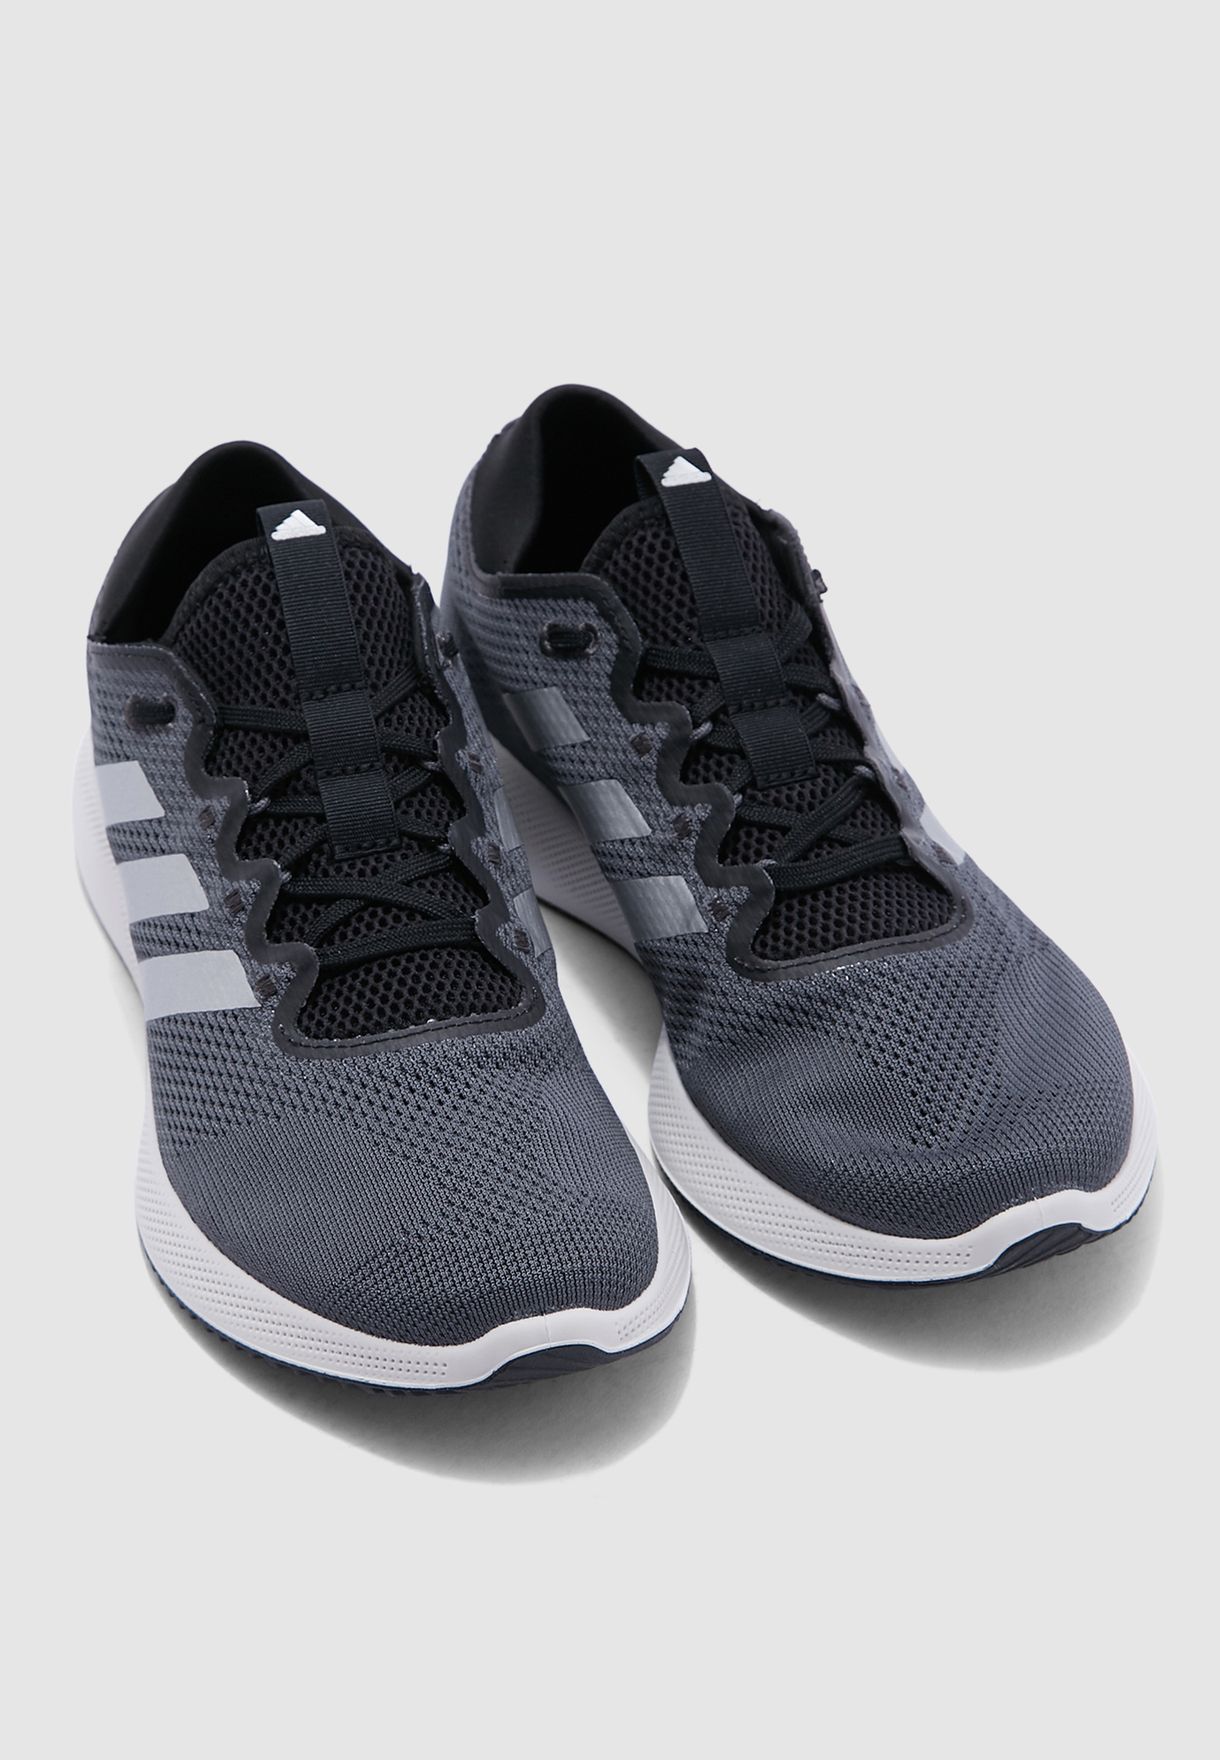 adidas flex running shoes